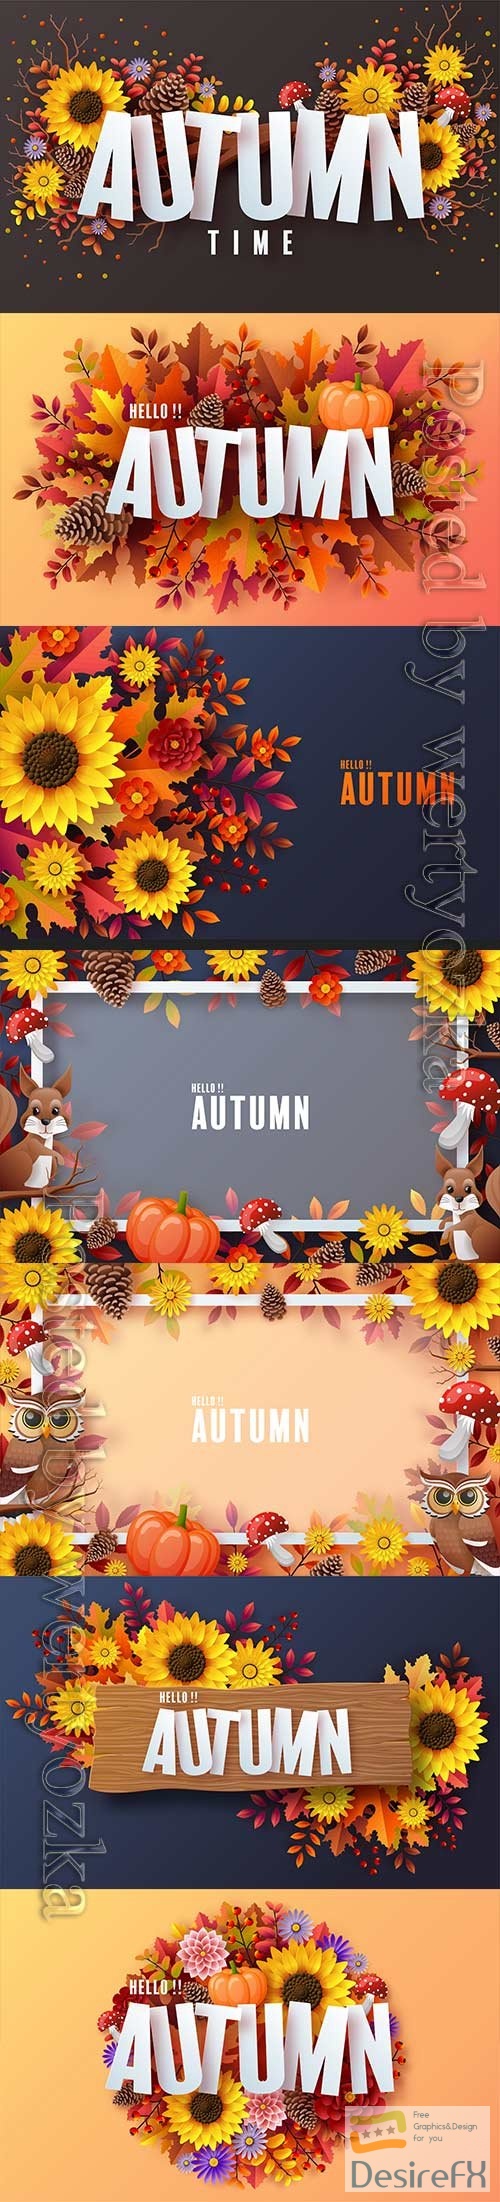 Autumn holiday seasonal vector background